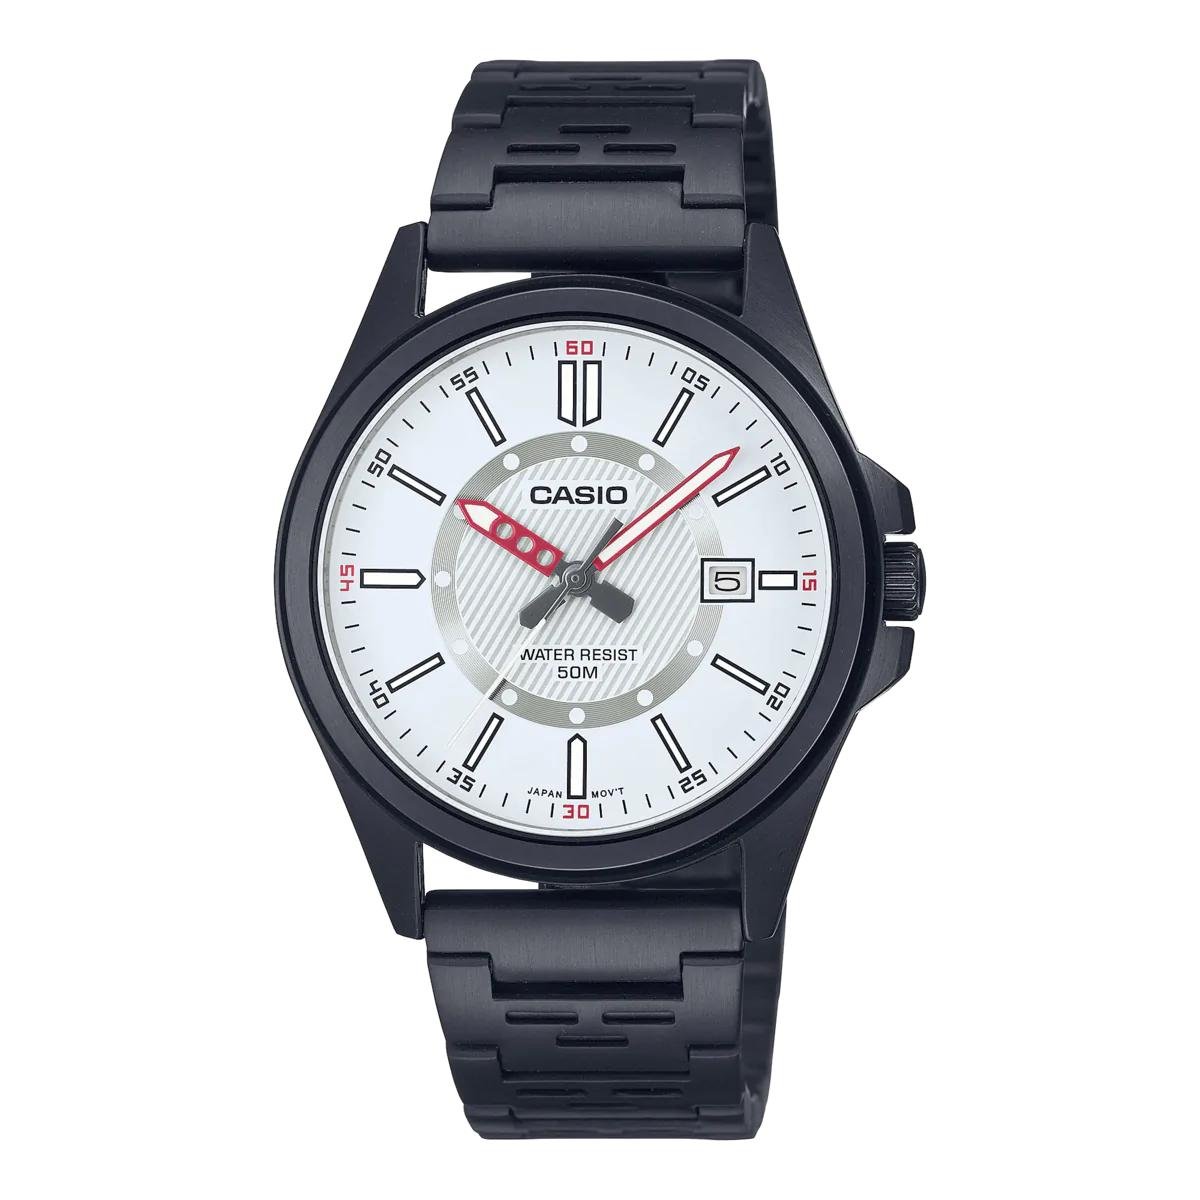 Casio Men's Wrist Watch - MTP-E700B-7EVDF | Stainless steel | Sports design | Chronograph | Quartz movement | Water Resistant |Halabh 